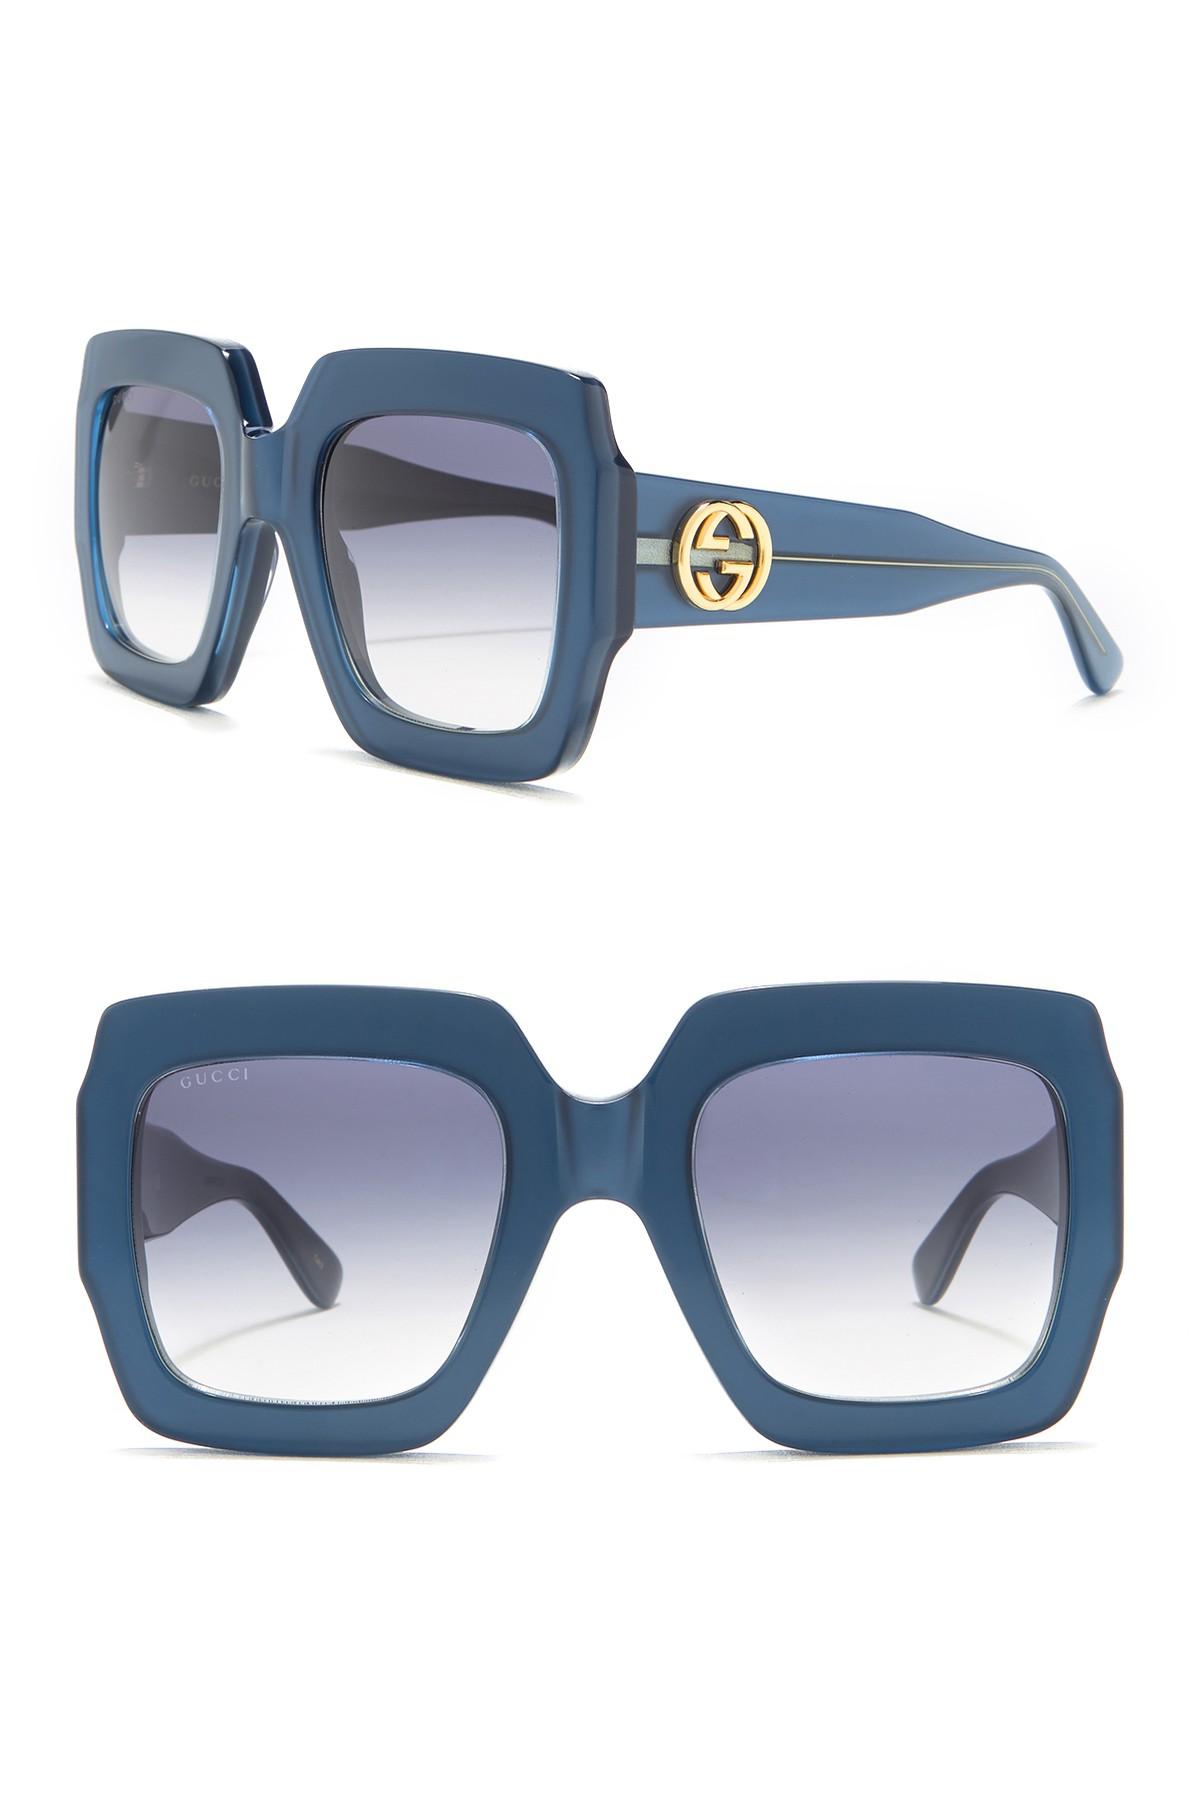 Aprender acerca 55+ imagen gucci oversized square plastic sunglasses ...